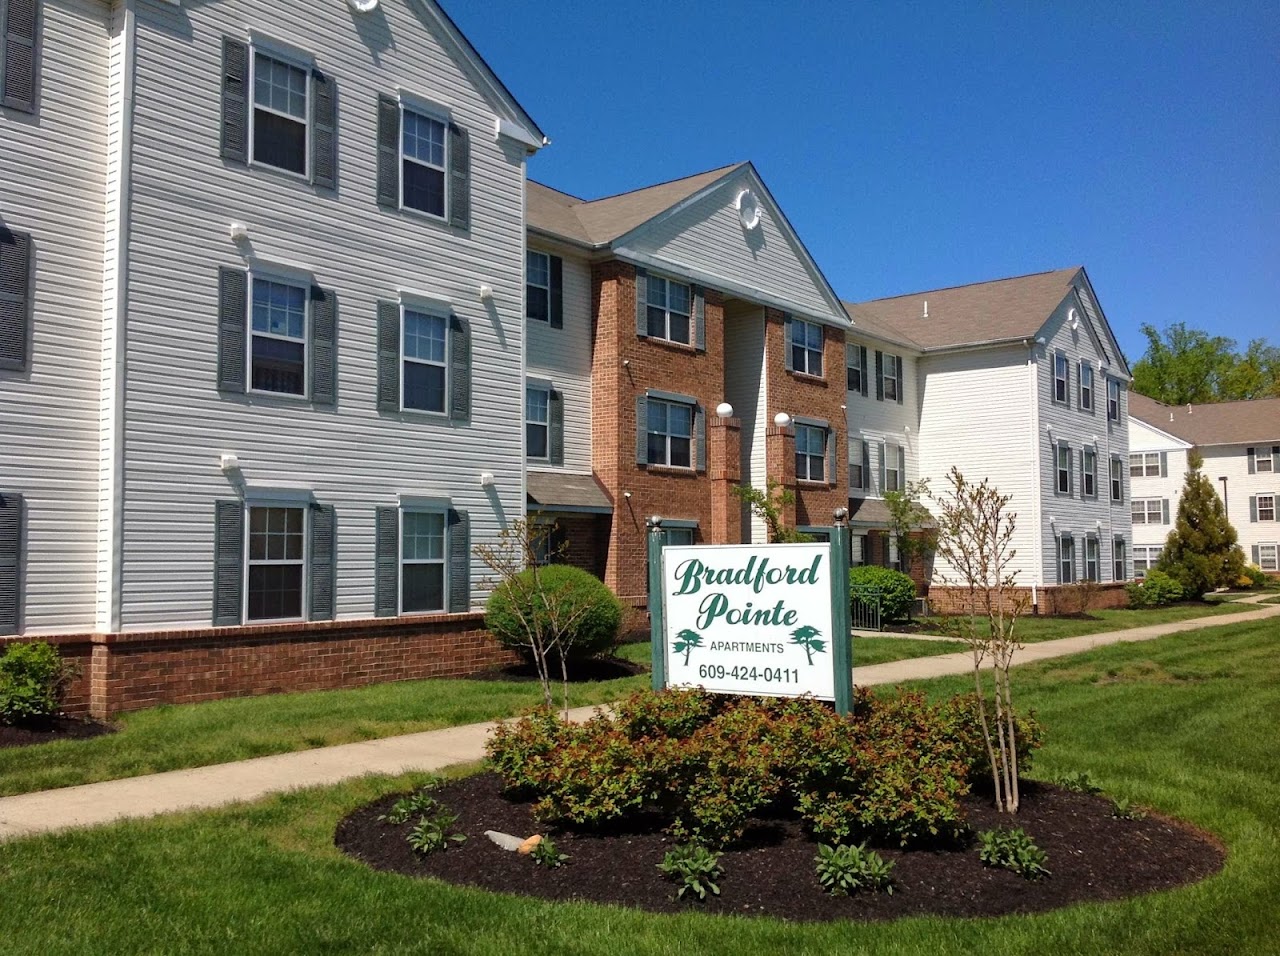 Photo of BRADFORD POINTE. Affordable housing located at 6 BRADFORD CT BORDENTOWN, NJ 